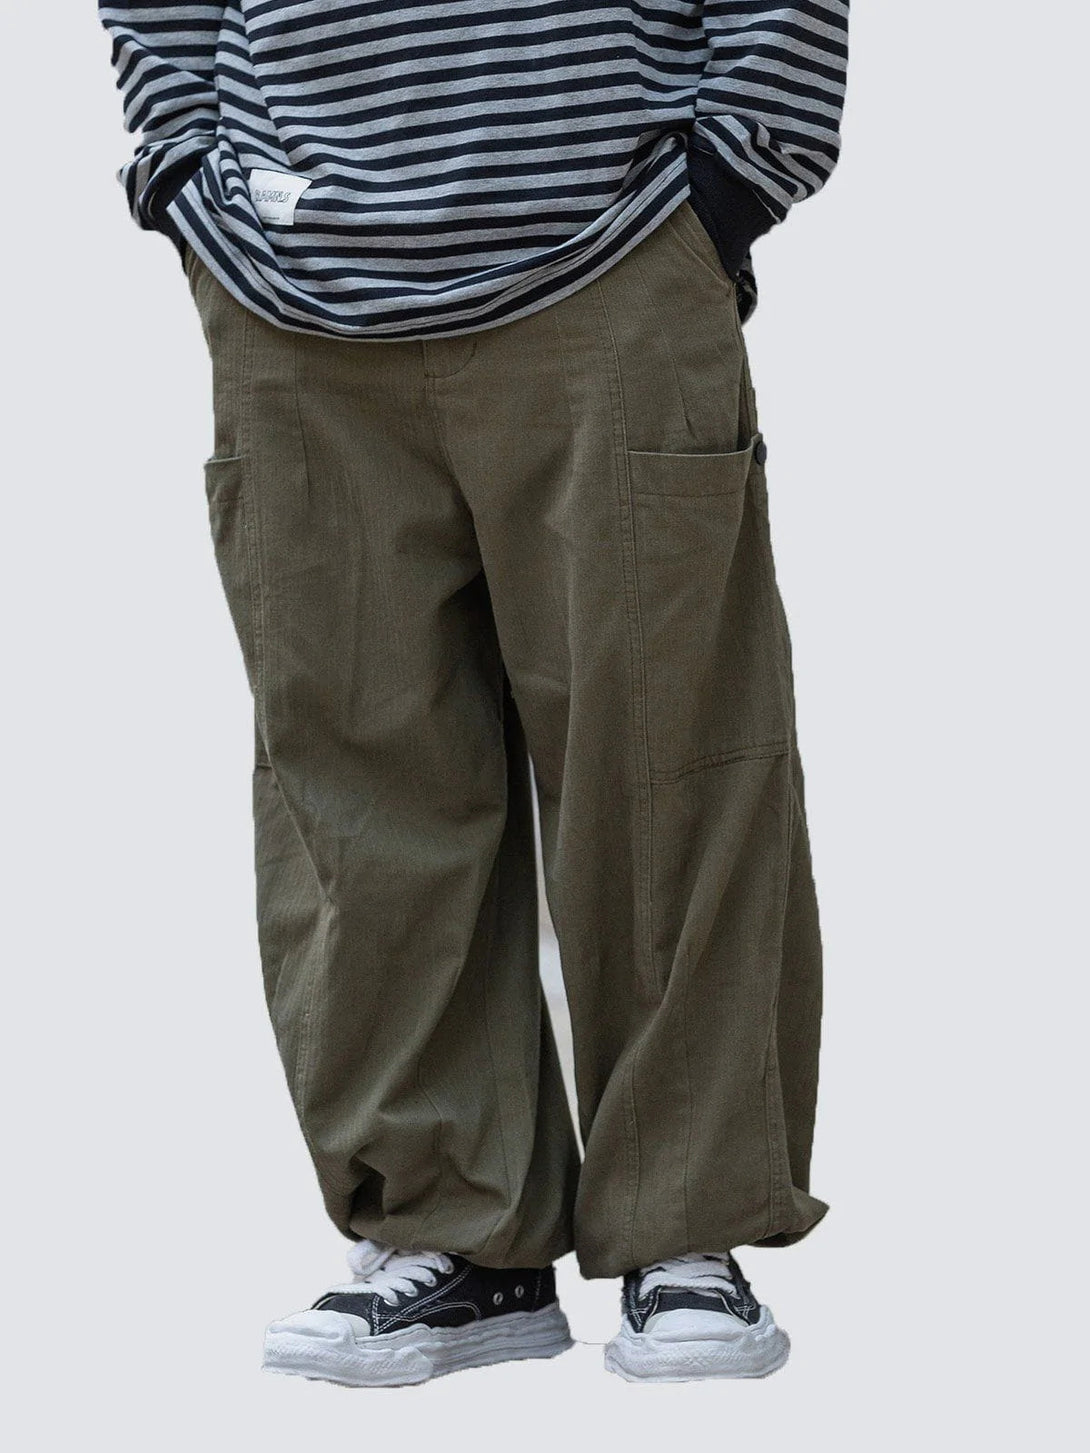 Majesda® - Patchwork Drawstring Pants outfit ideas streetwear fashion